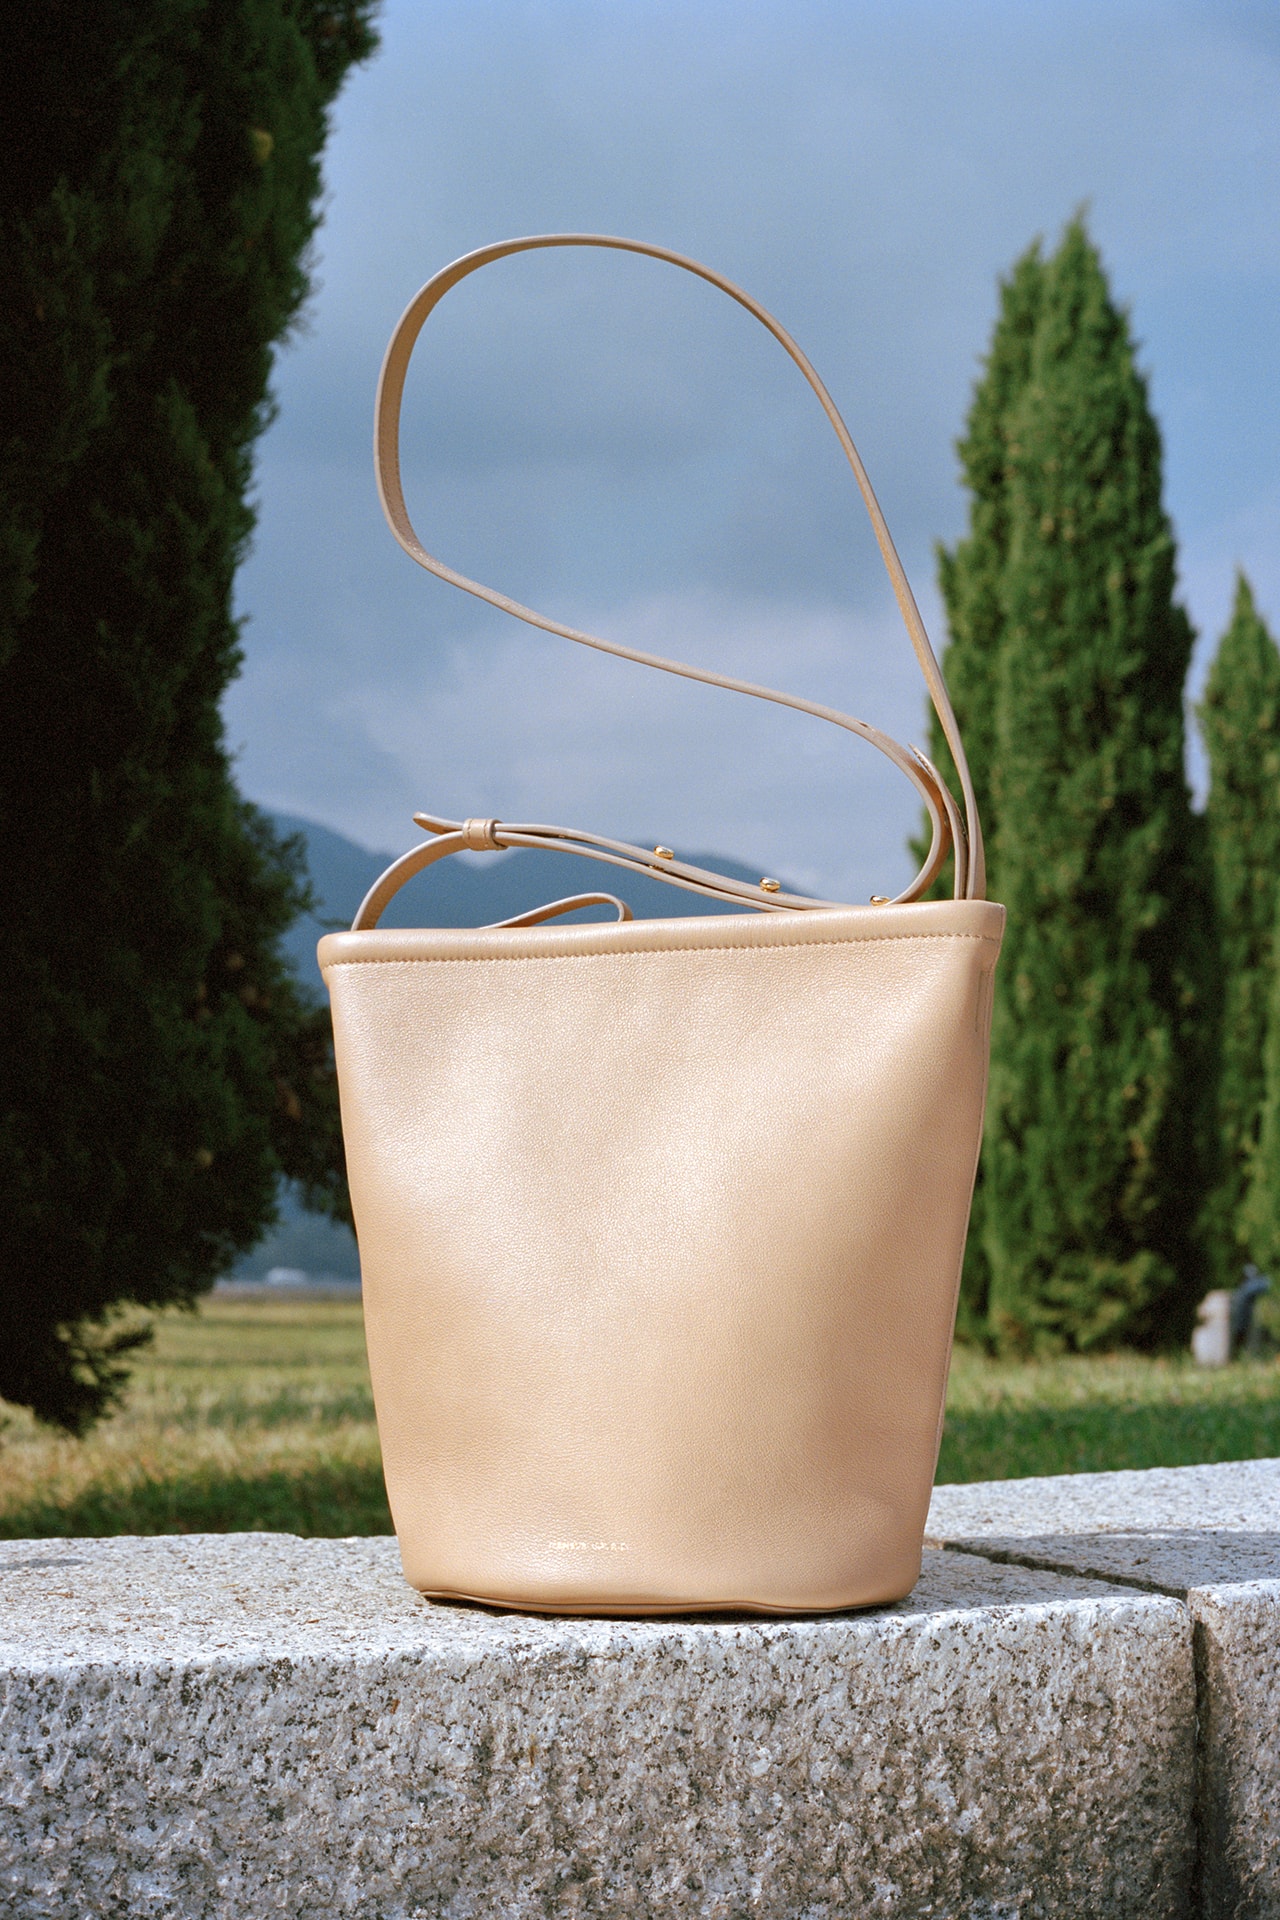 Mansur Gavriel Zip Bucket Bag Lookbook Crossbody Designer Handbag Affordable Tan